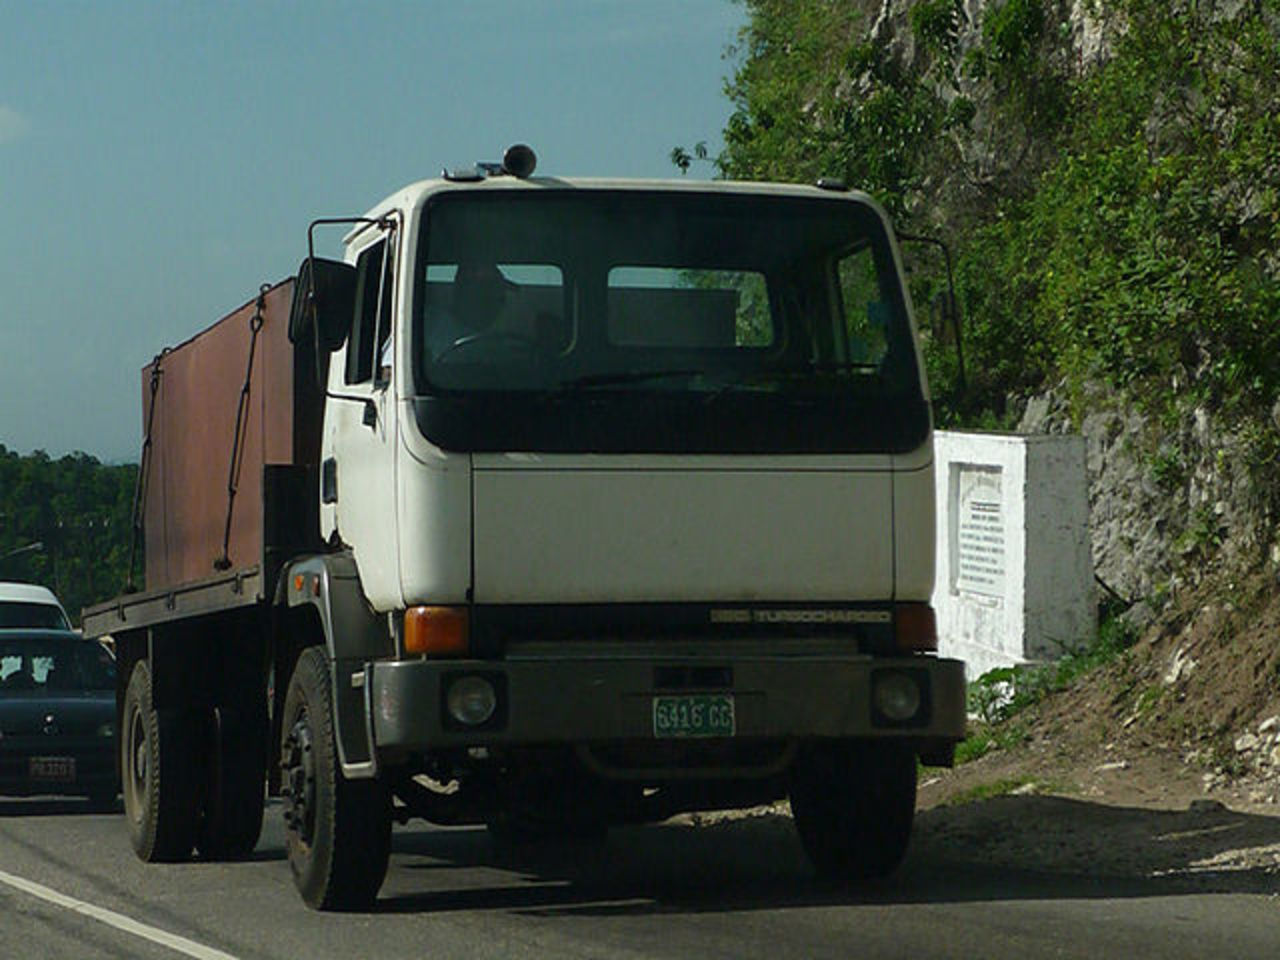 File:Jamaican Leyland Freighter (4858158873).jpg - Wikimedia Commons